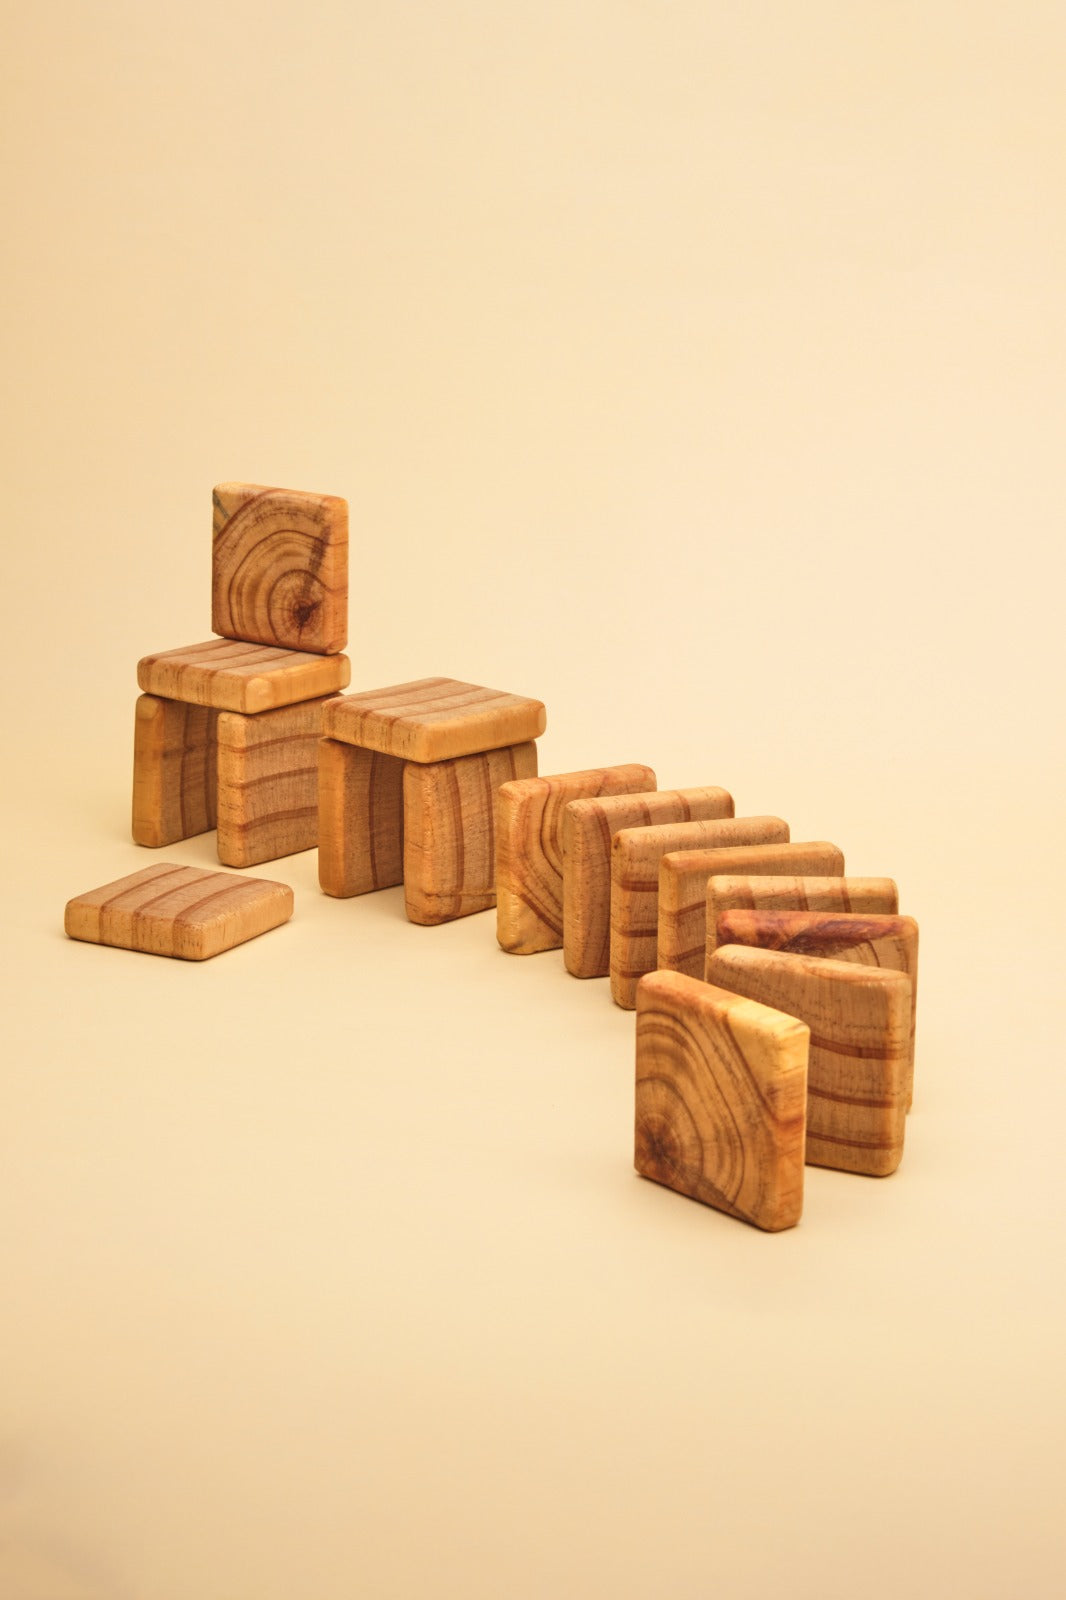 The Art of Handmade Wooden Toys